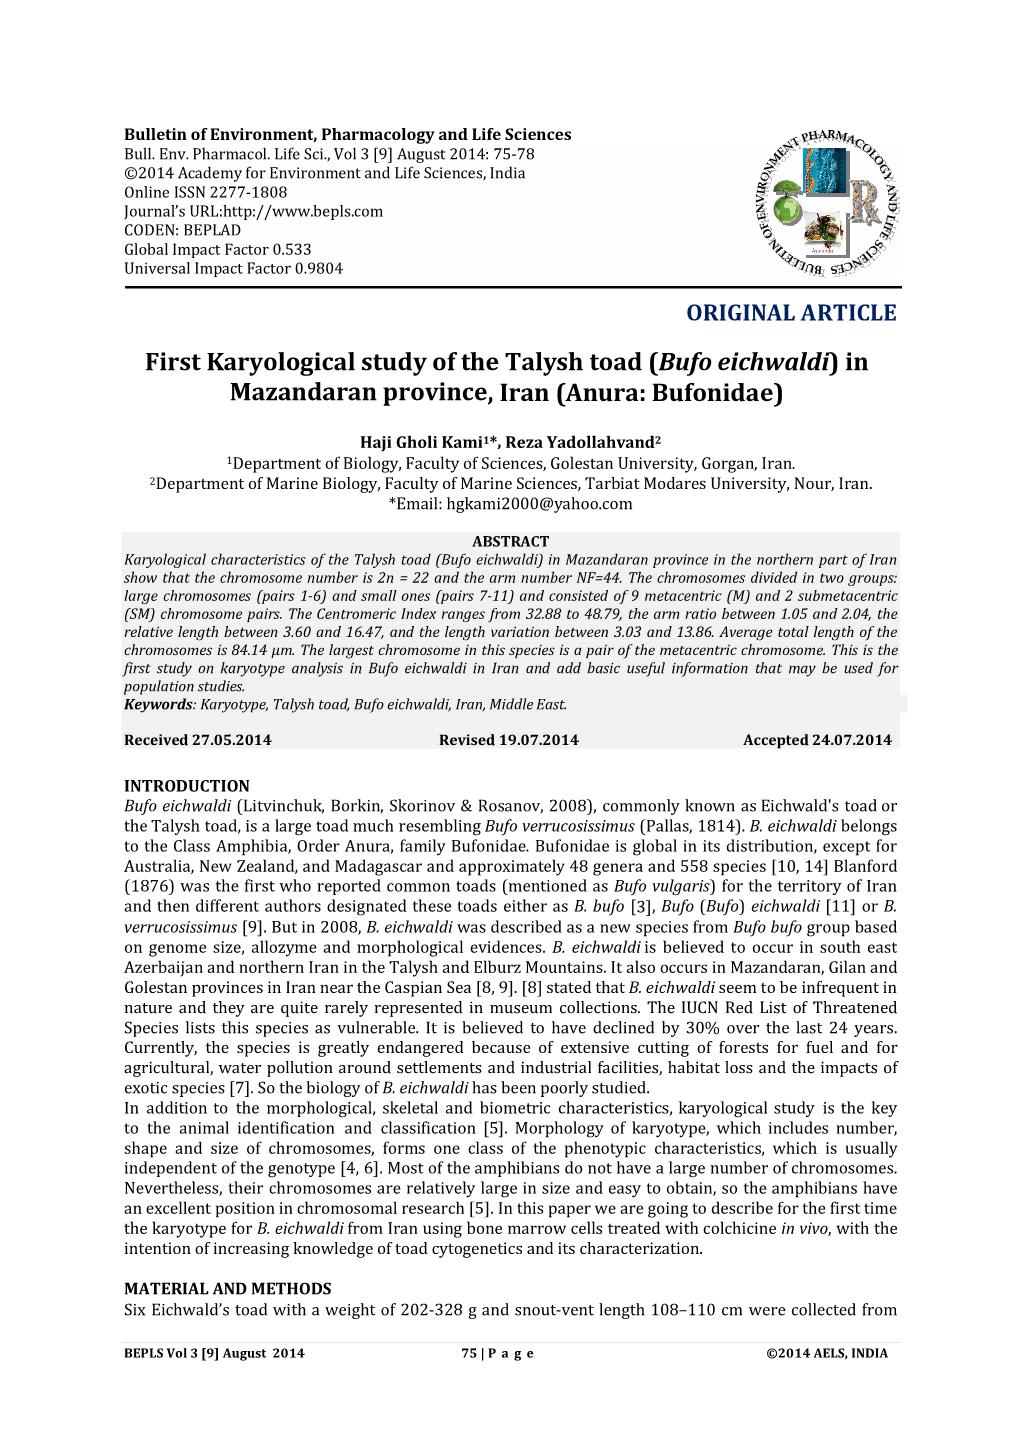 First Karyological Study of the Talysh Toad (Bufo Eichwaldi) in Mazandaran Province, Iran (Anura: Bufonidae)